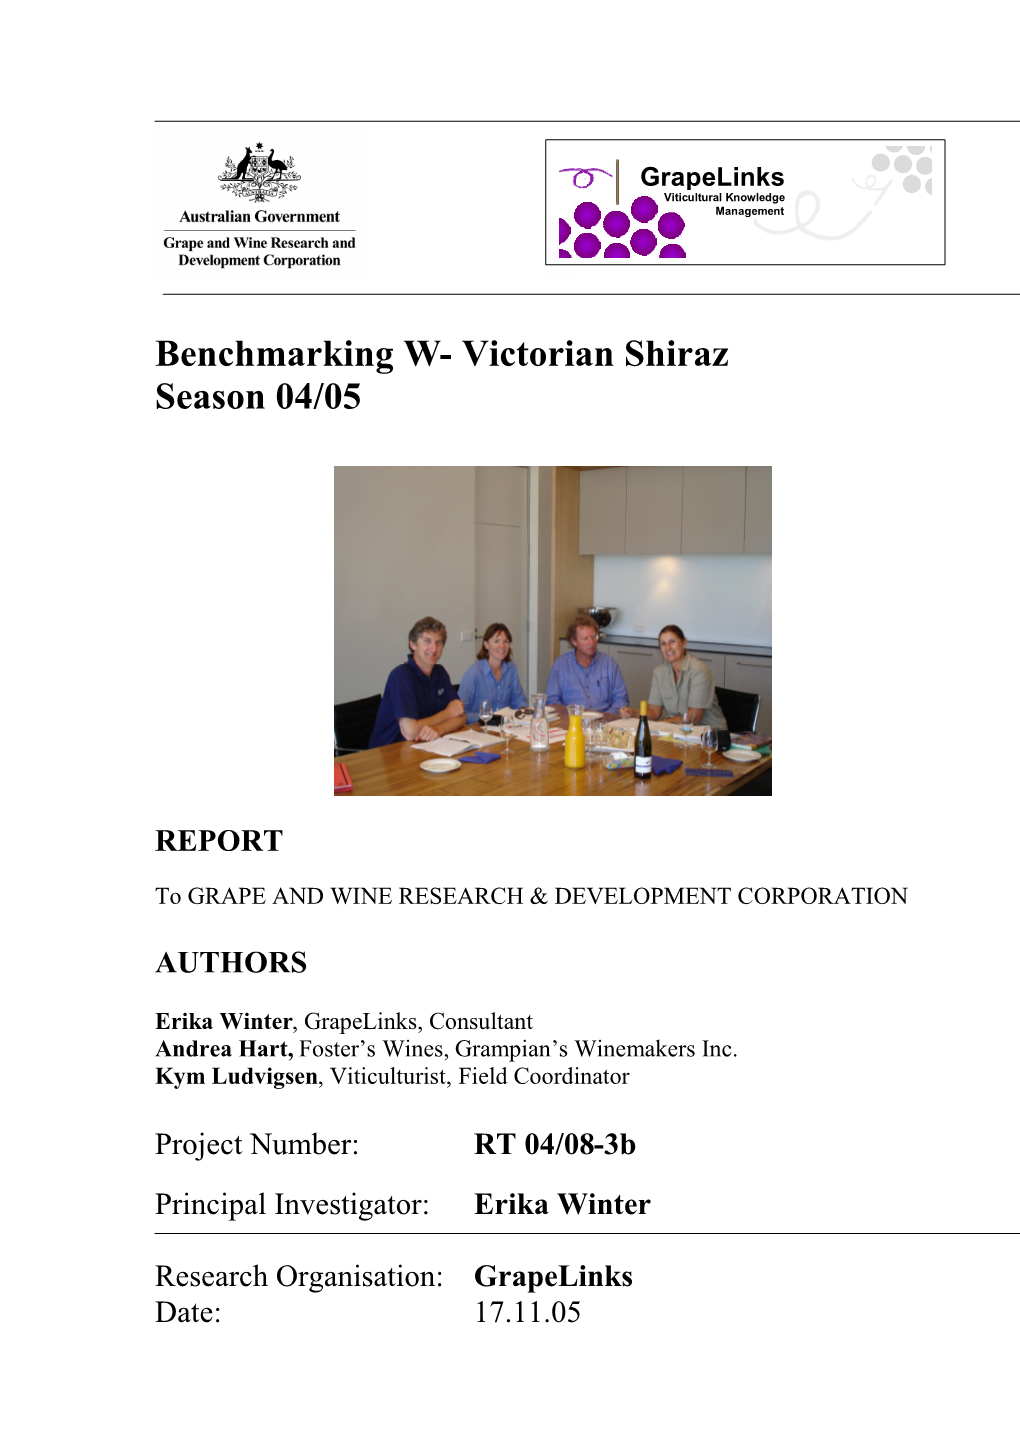 Benchmarking W- Victorian Shiraz Season 04/05